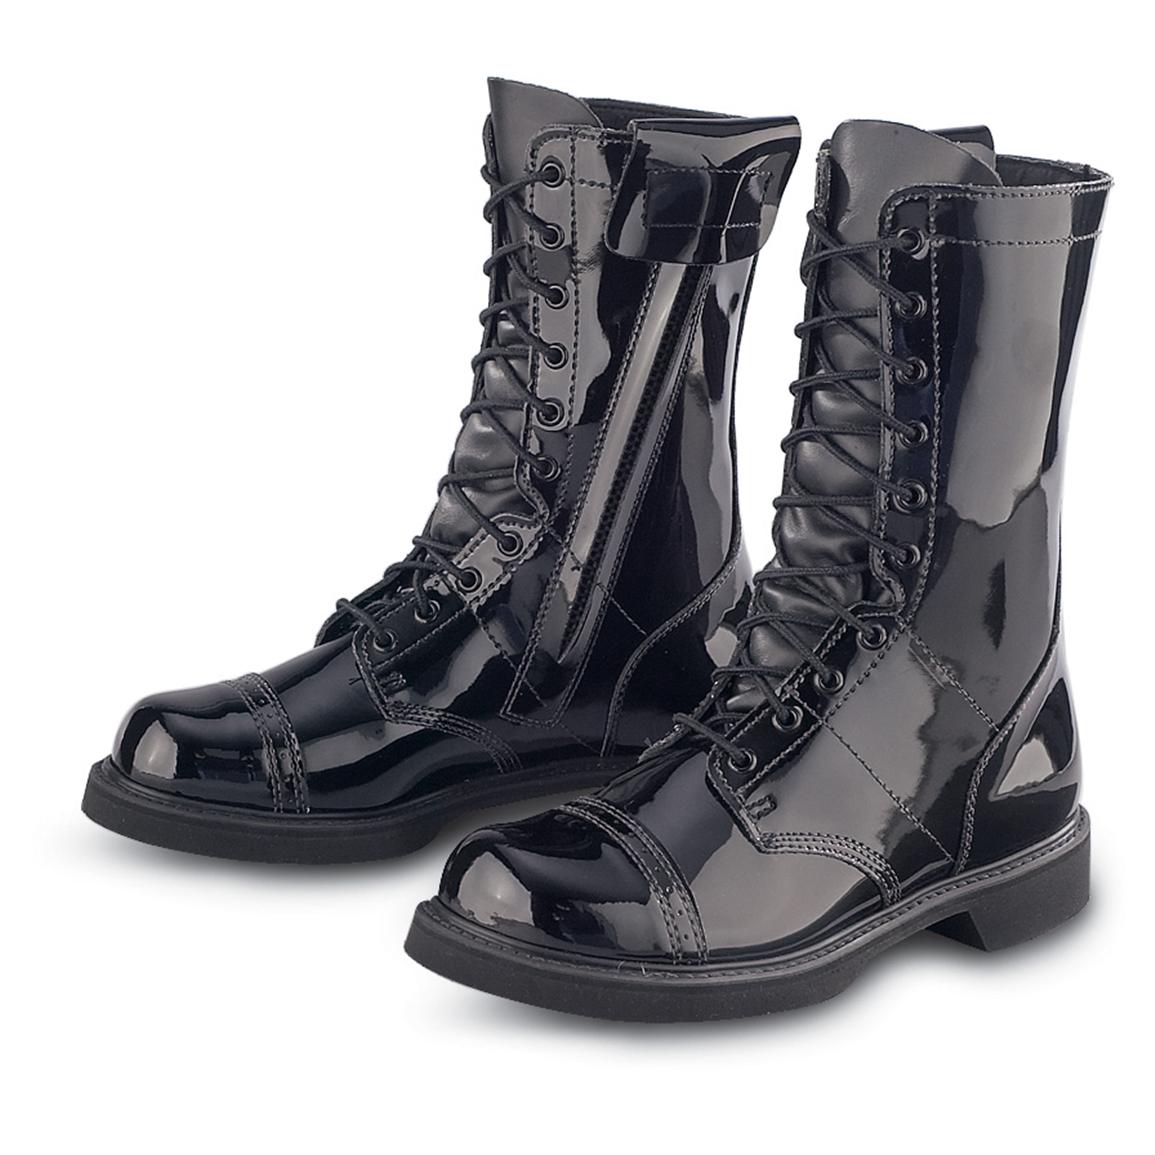 Men's Bates® Paratrooper Boots, Black 